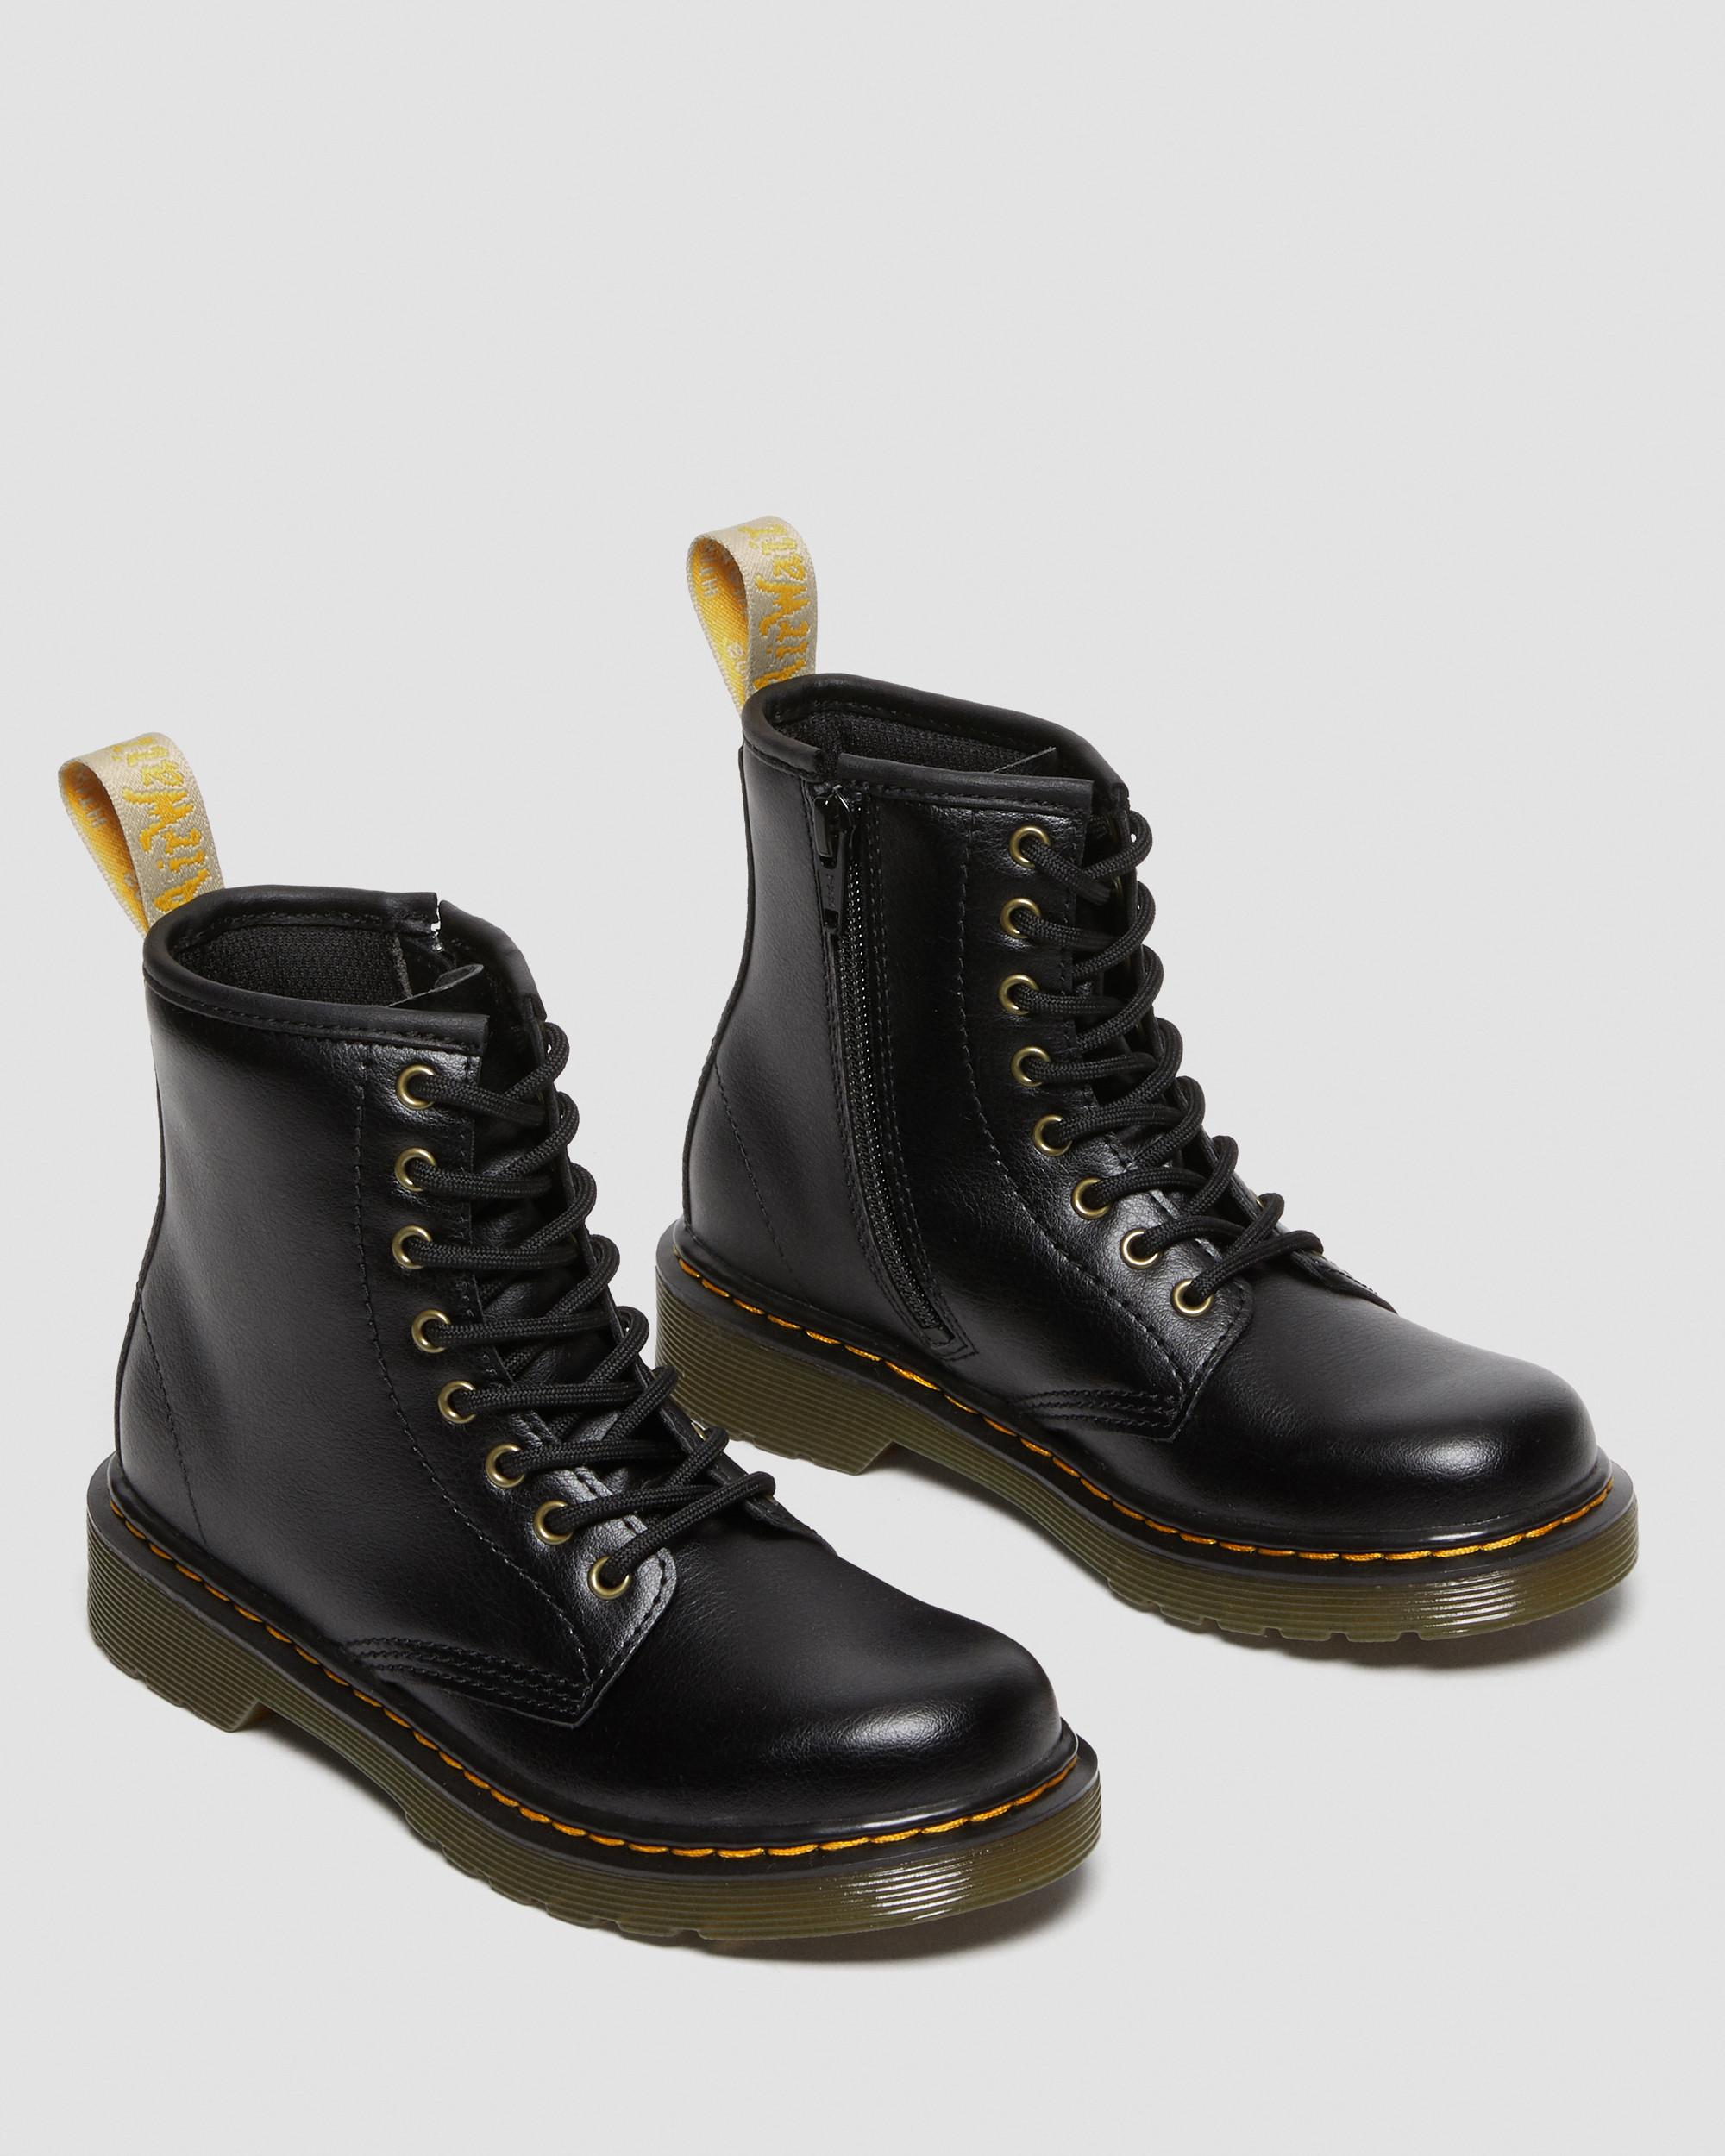 Vegan Junior 1460 Lace Up Boots in Black | Dr. Martens